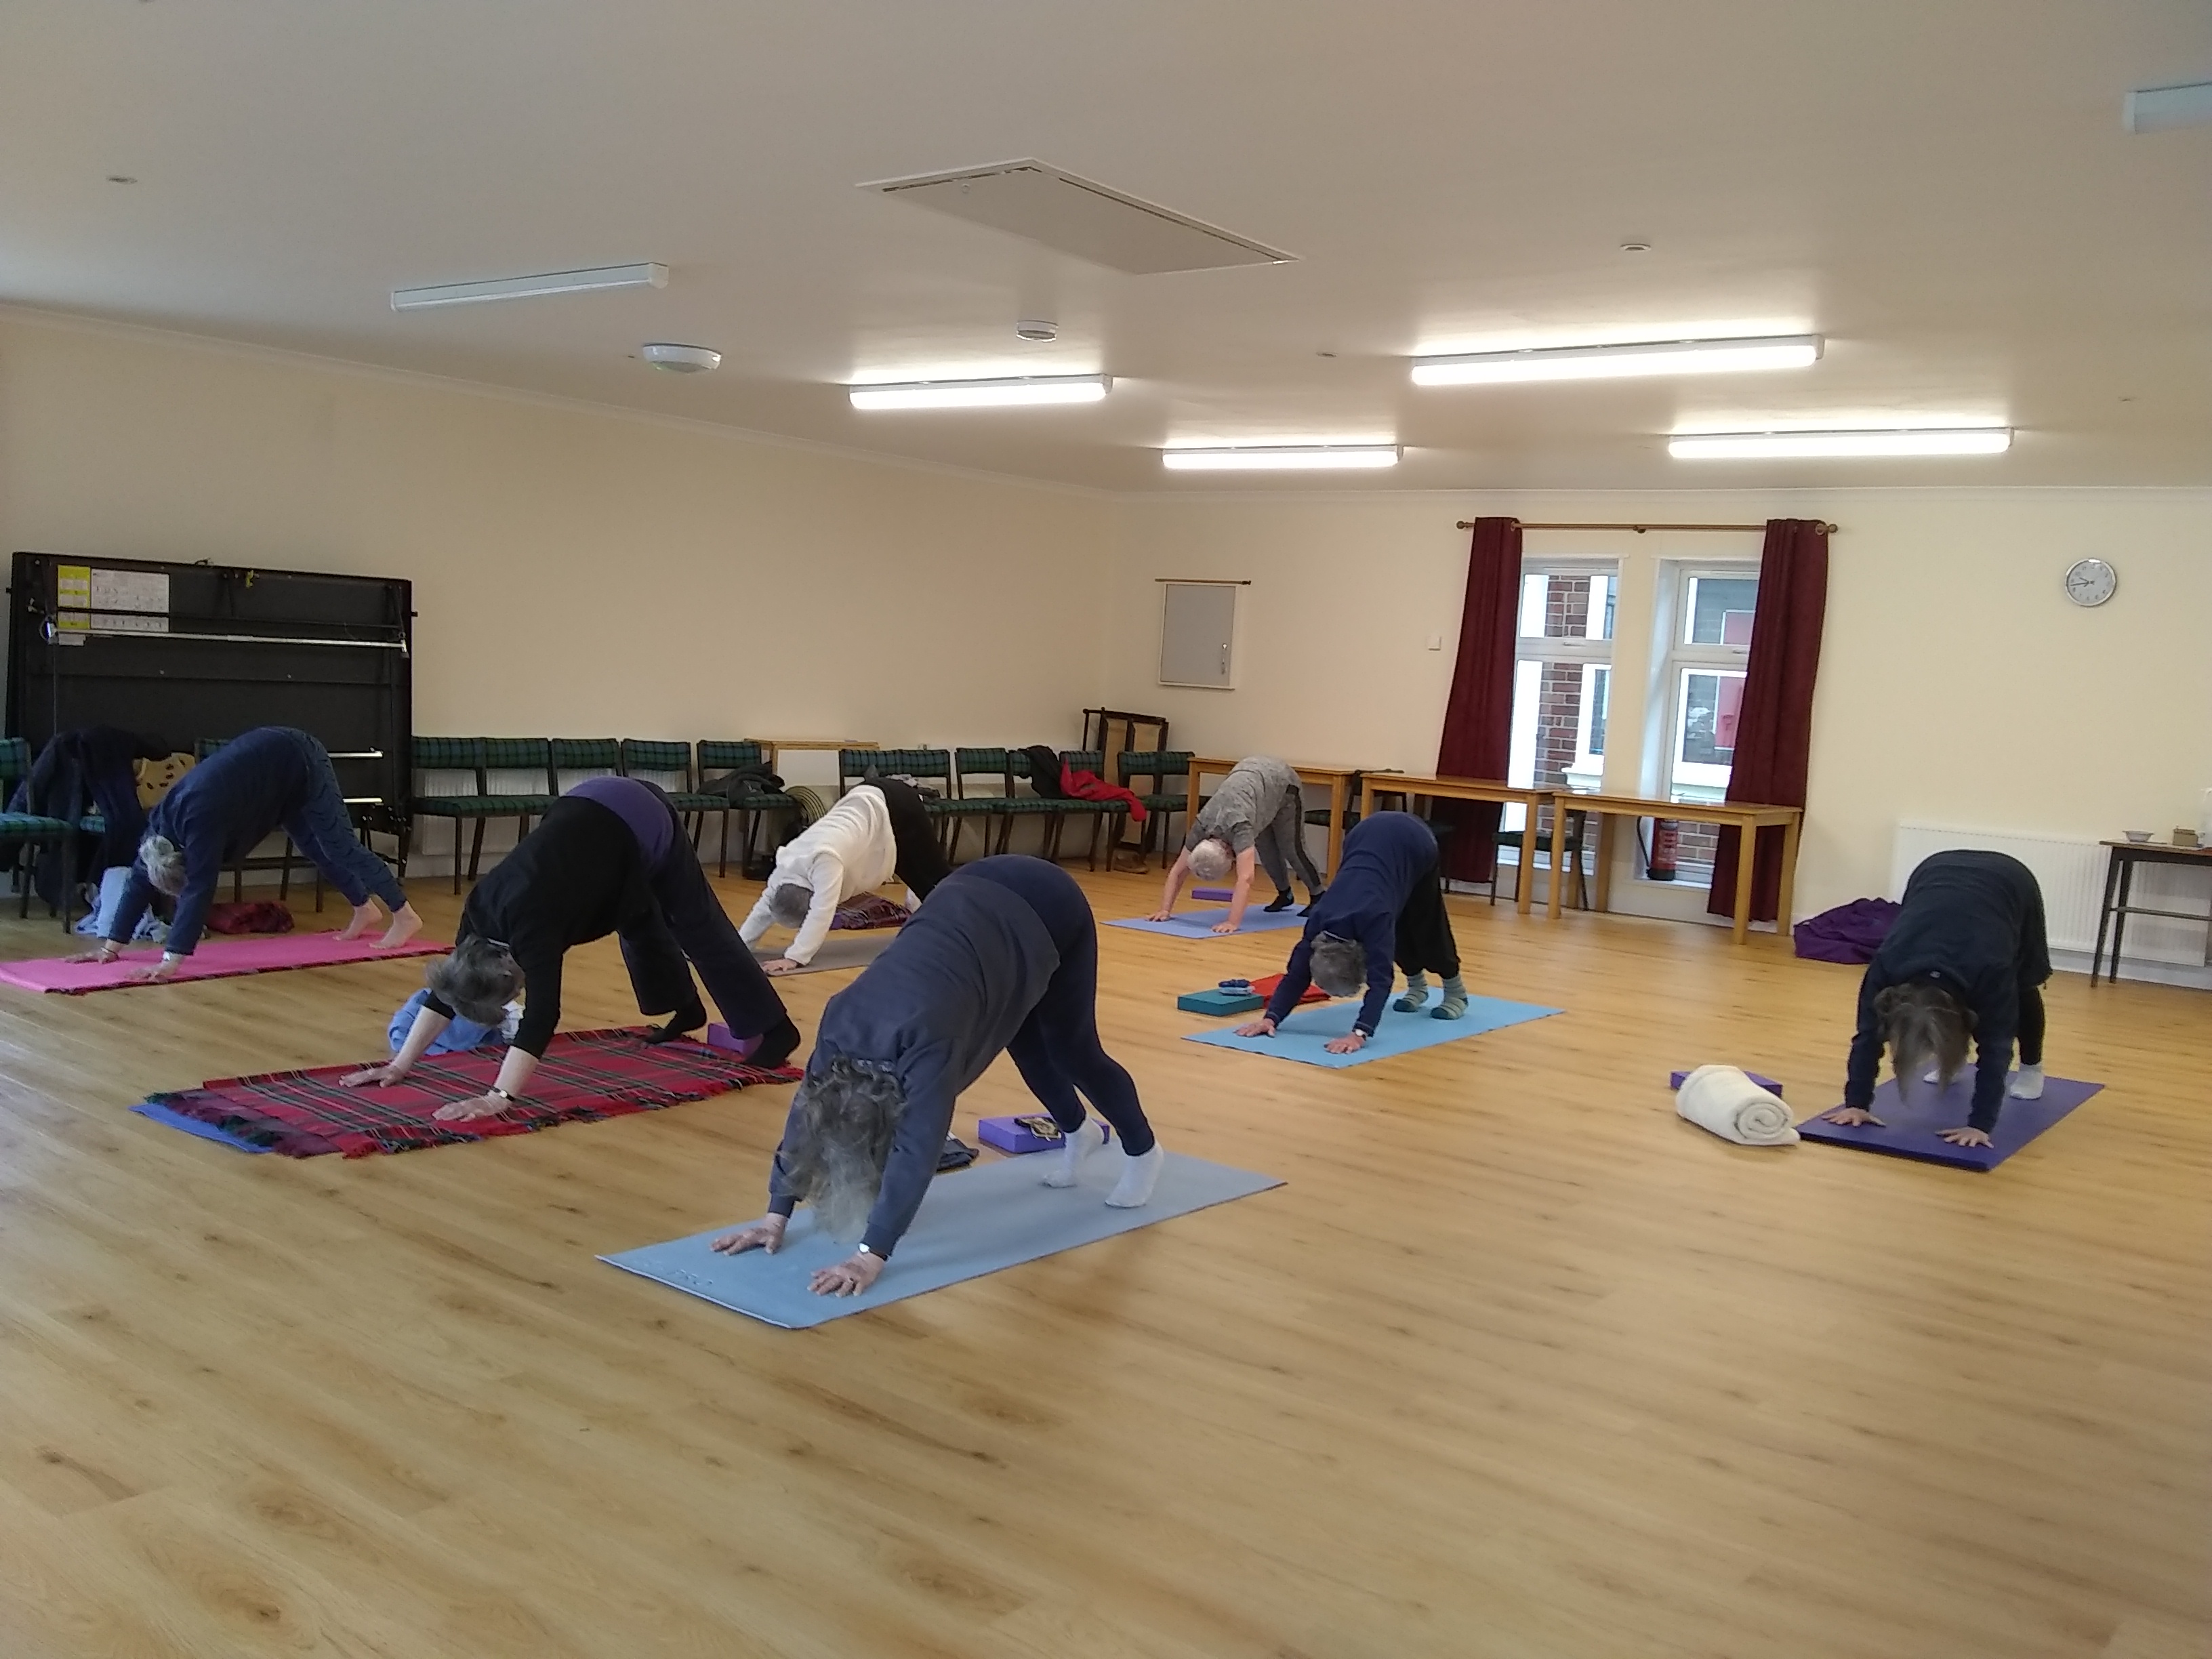 Yoga group in progress